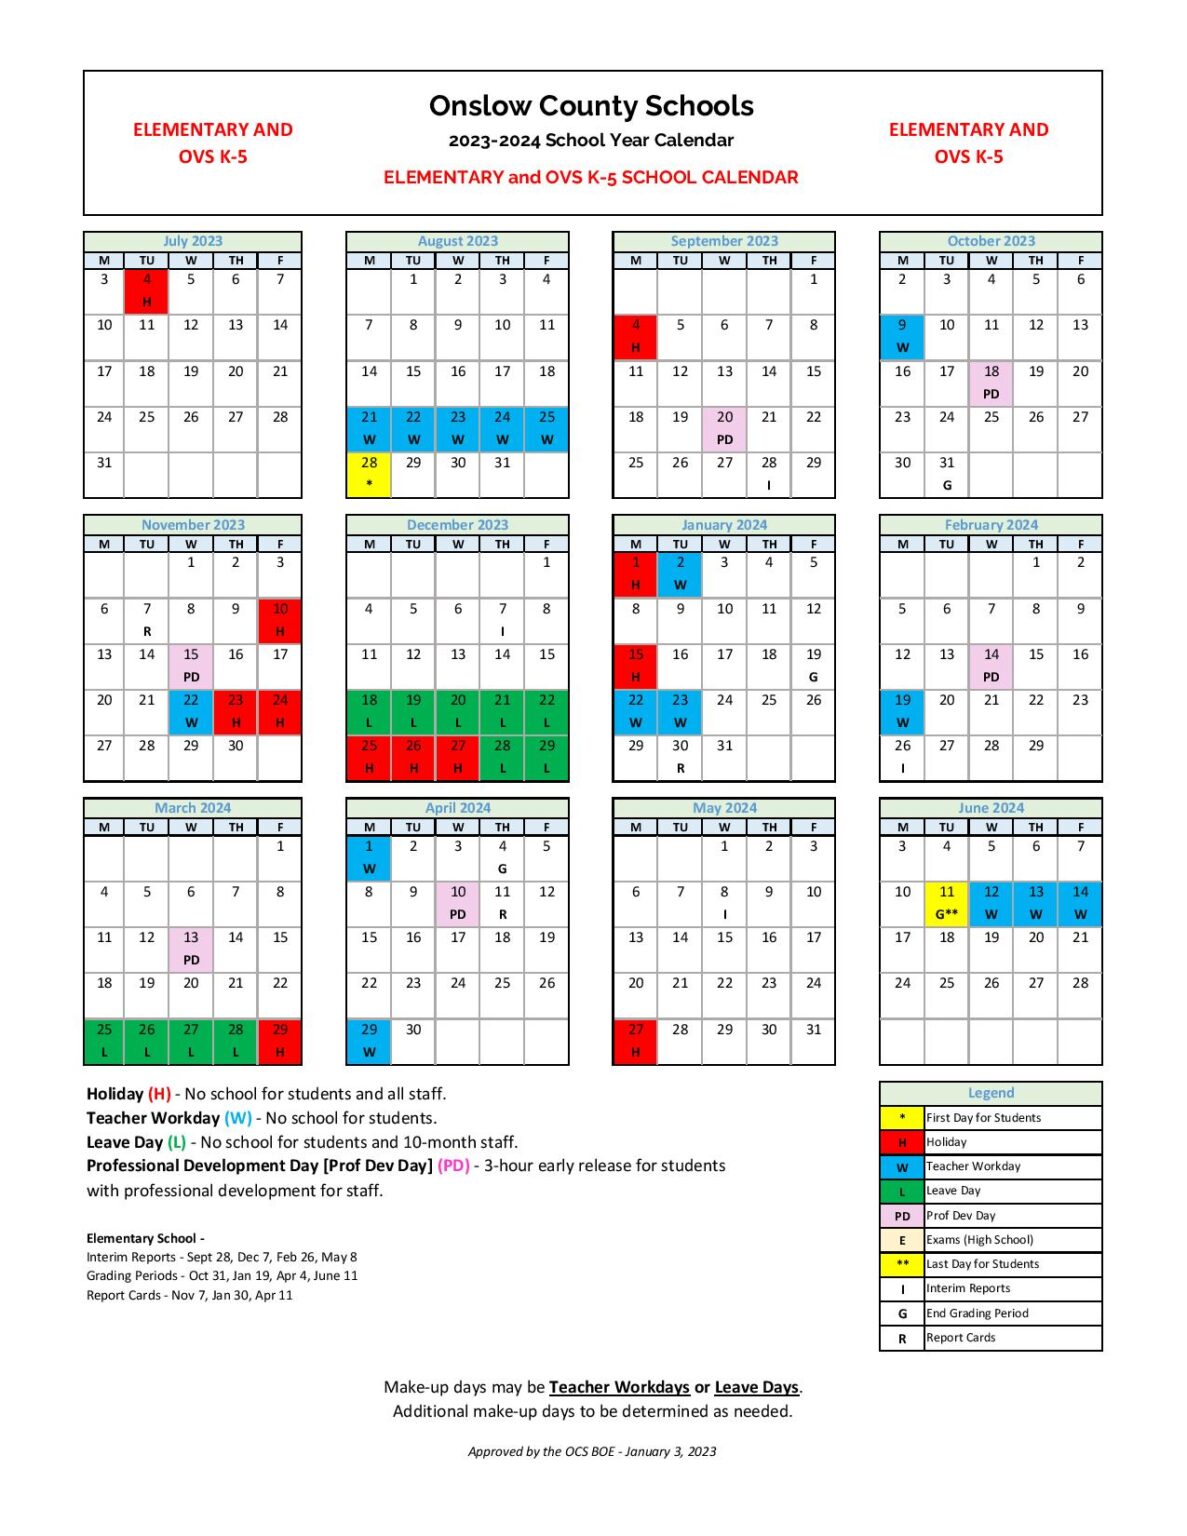 Onslow County Schools Calendar 1187x1536 